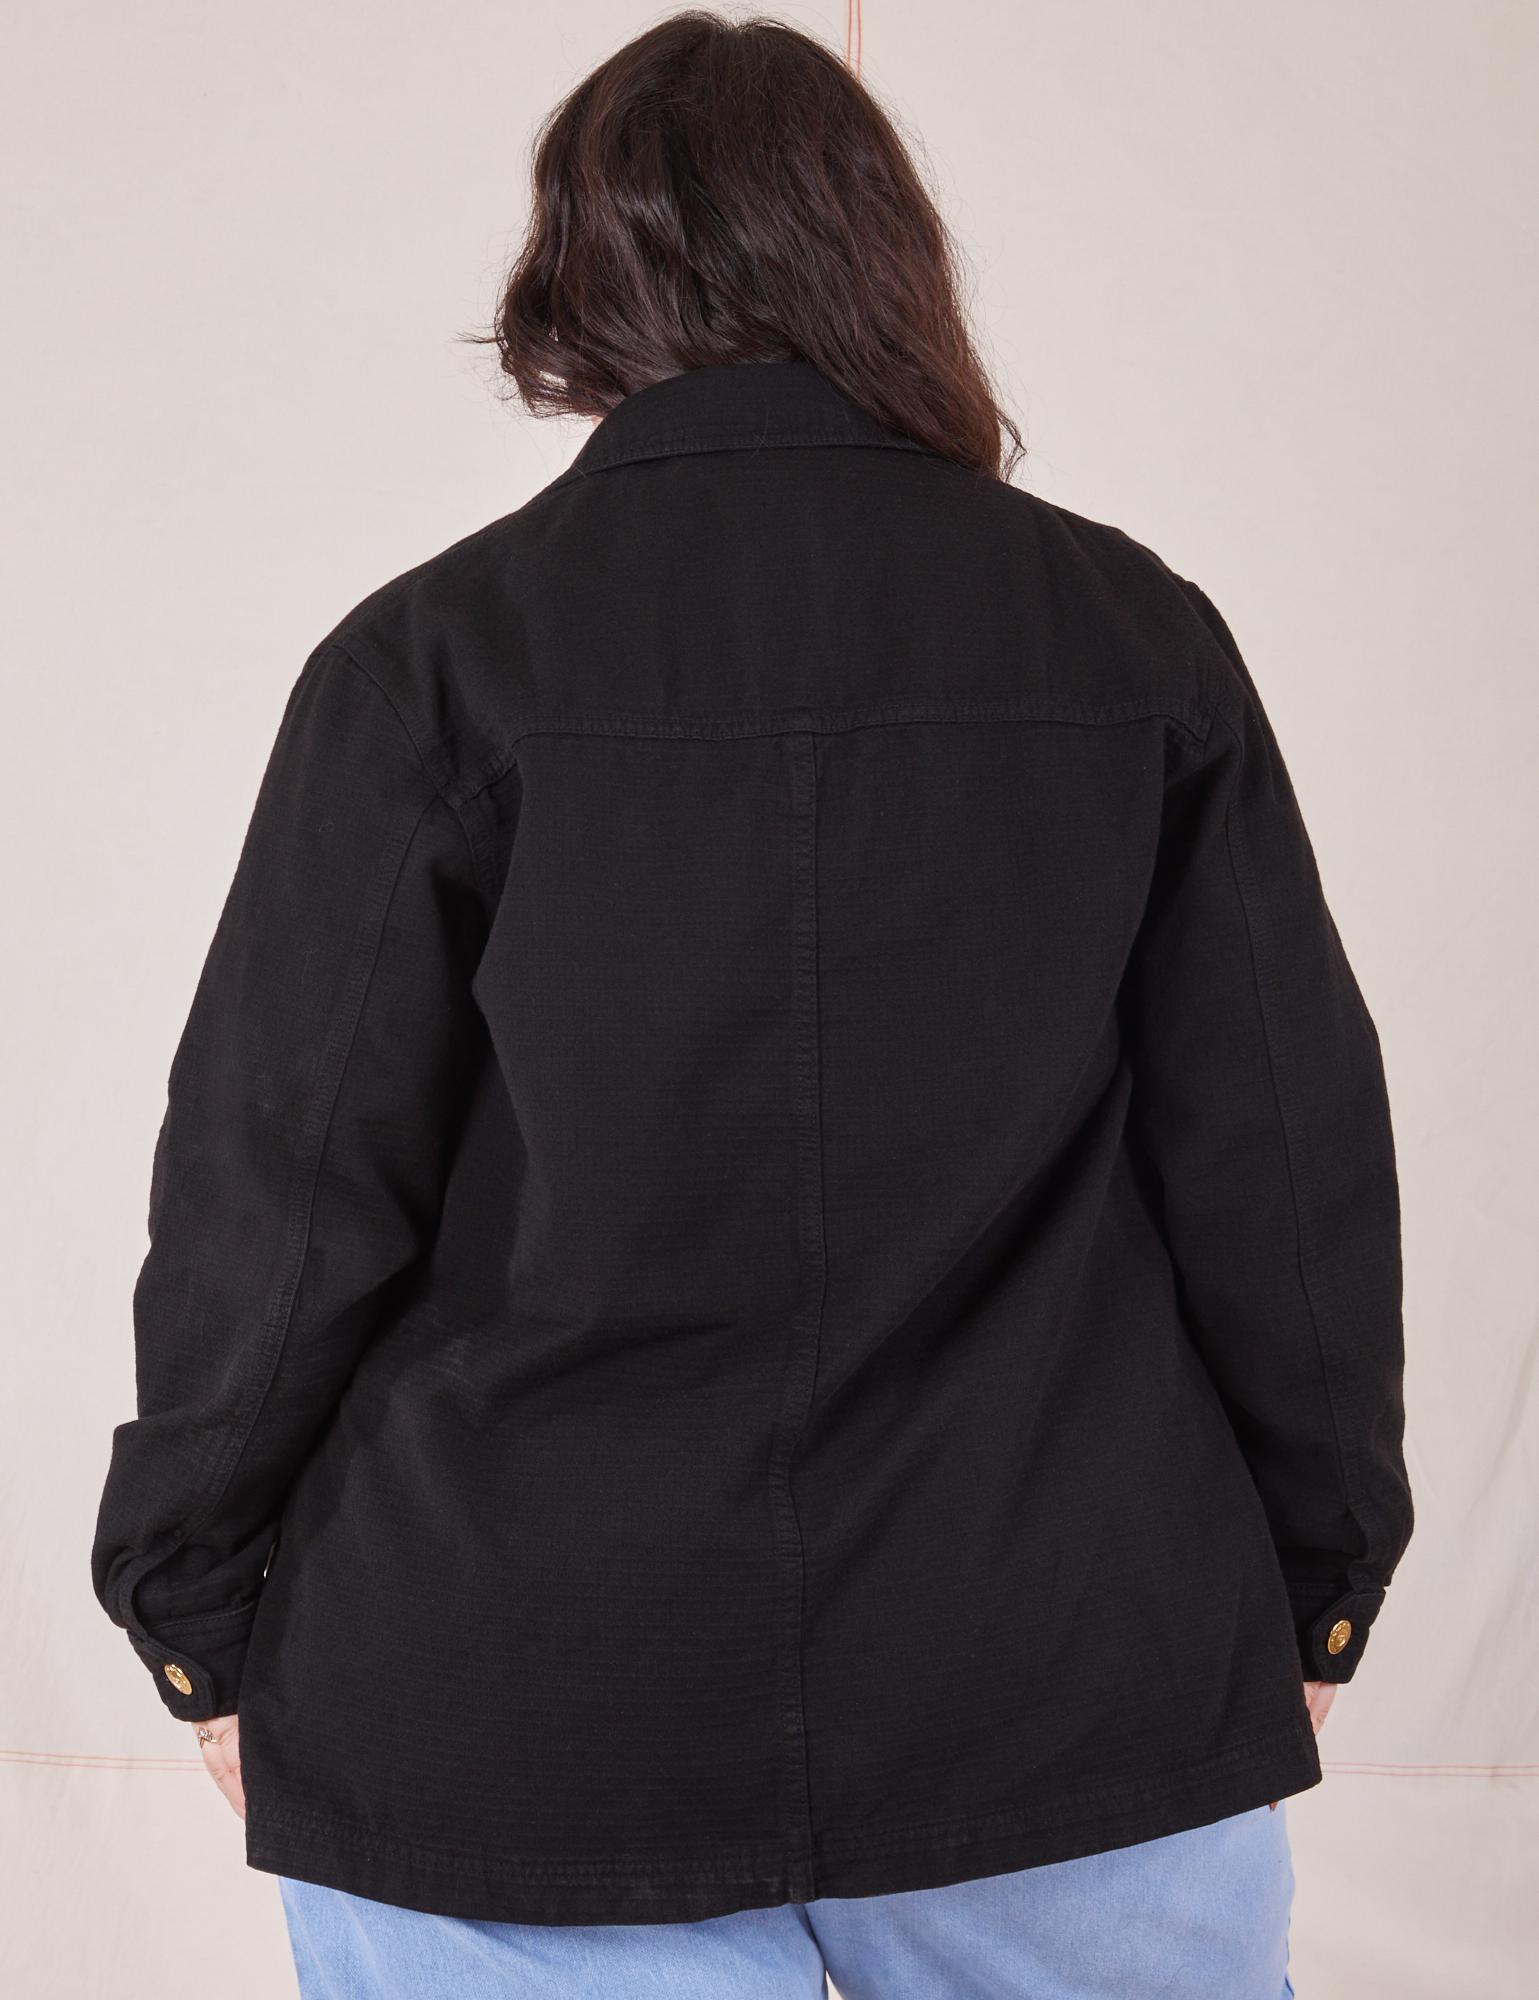 Field Coat in Basic Black back view on Ashley